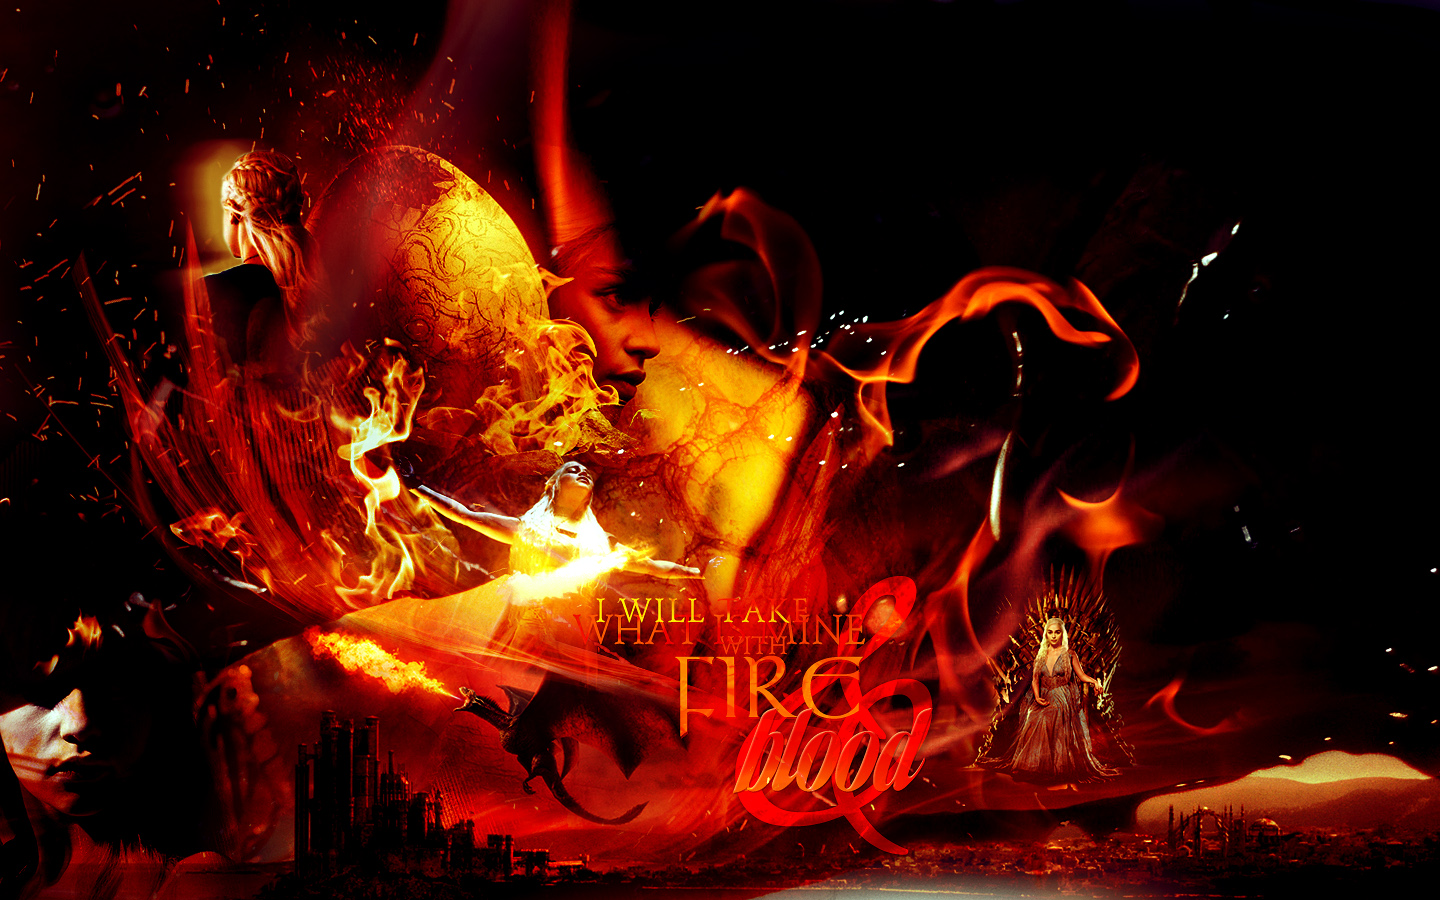 Game of Thrones images Daenerys Targaryen HD wallpaper and background